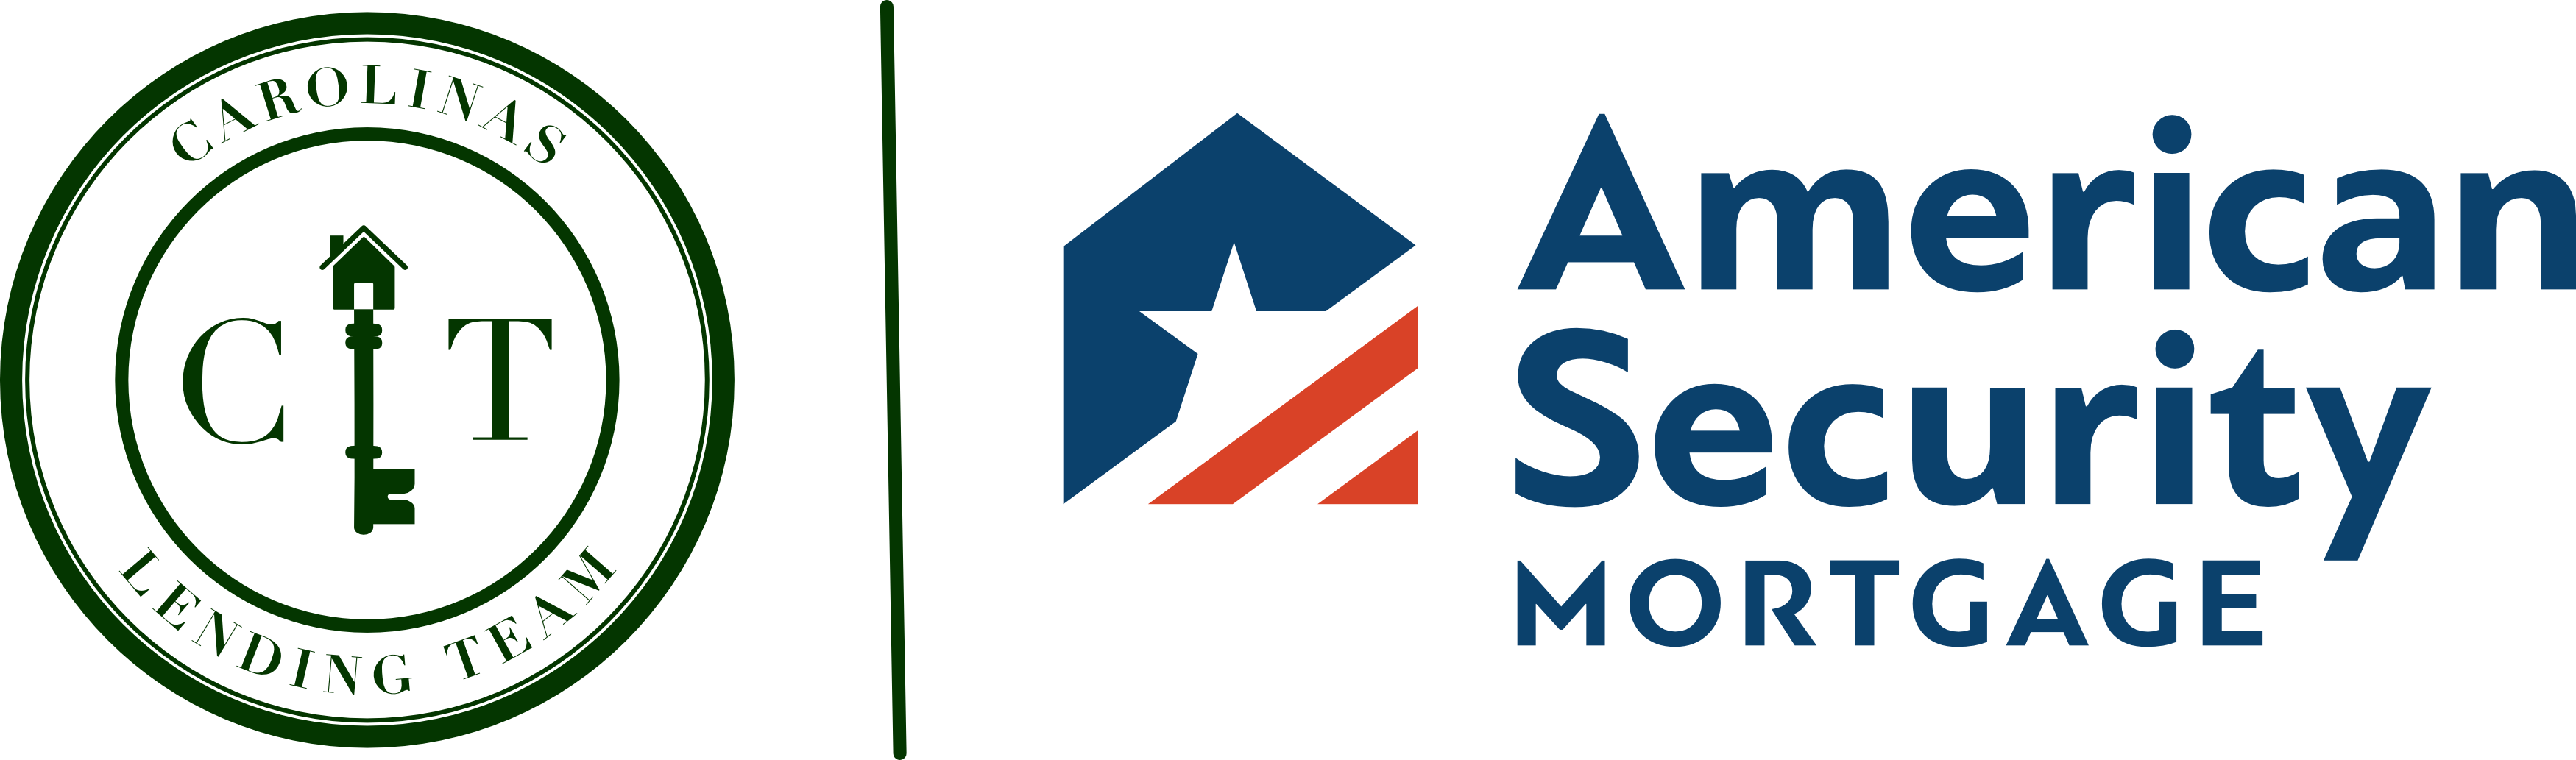 American Security Mortgage-Carolina's Lending Team